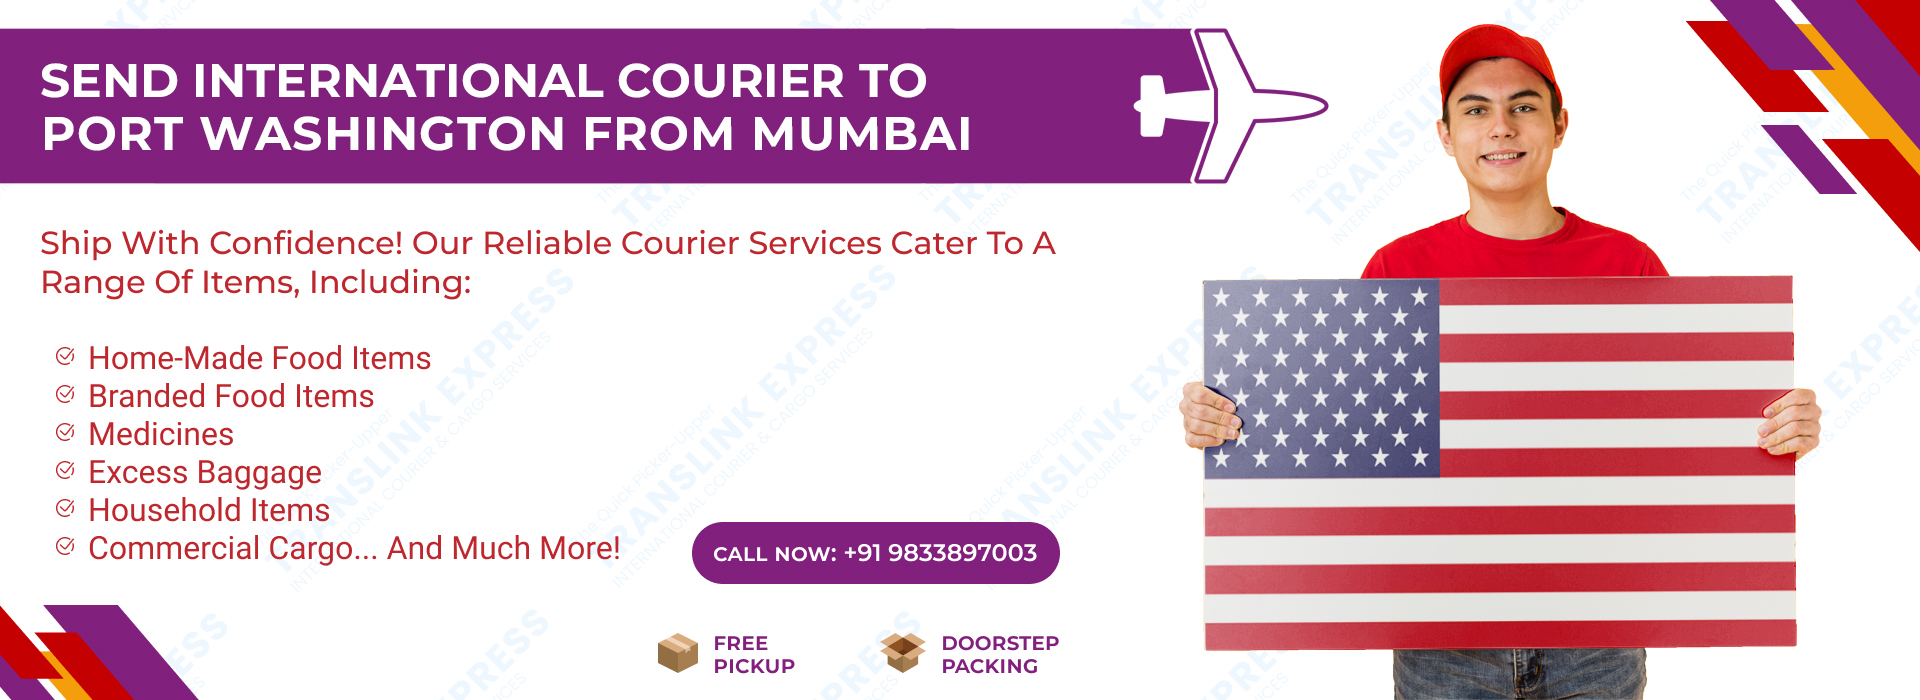 Courier to Port Washington From Mumbai